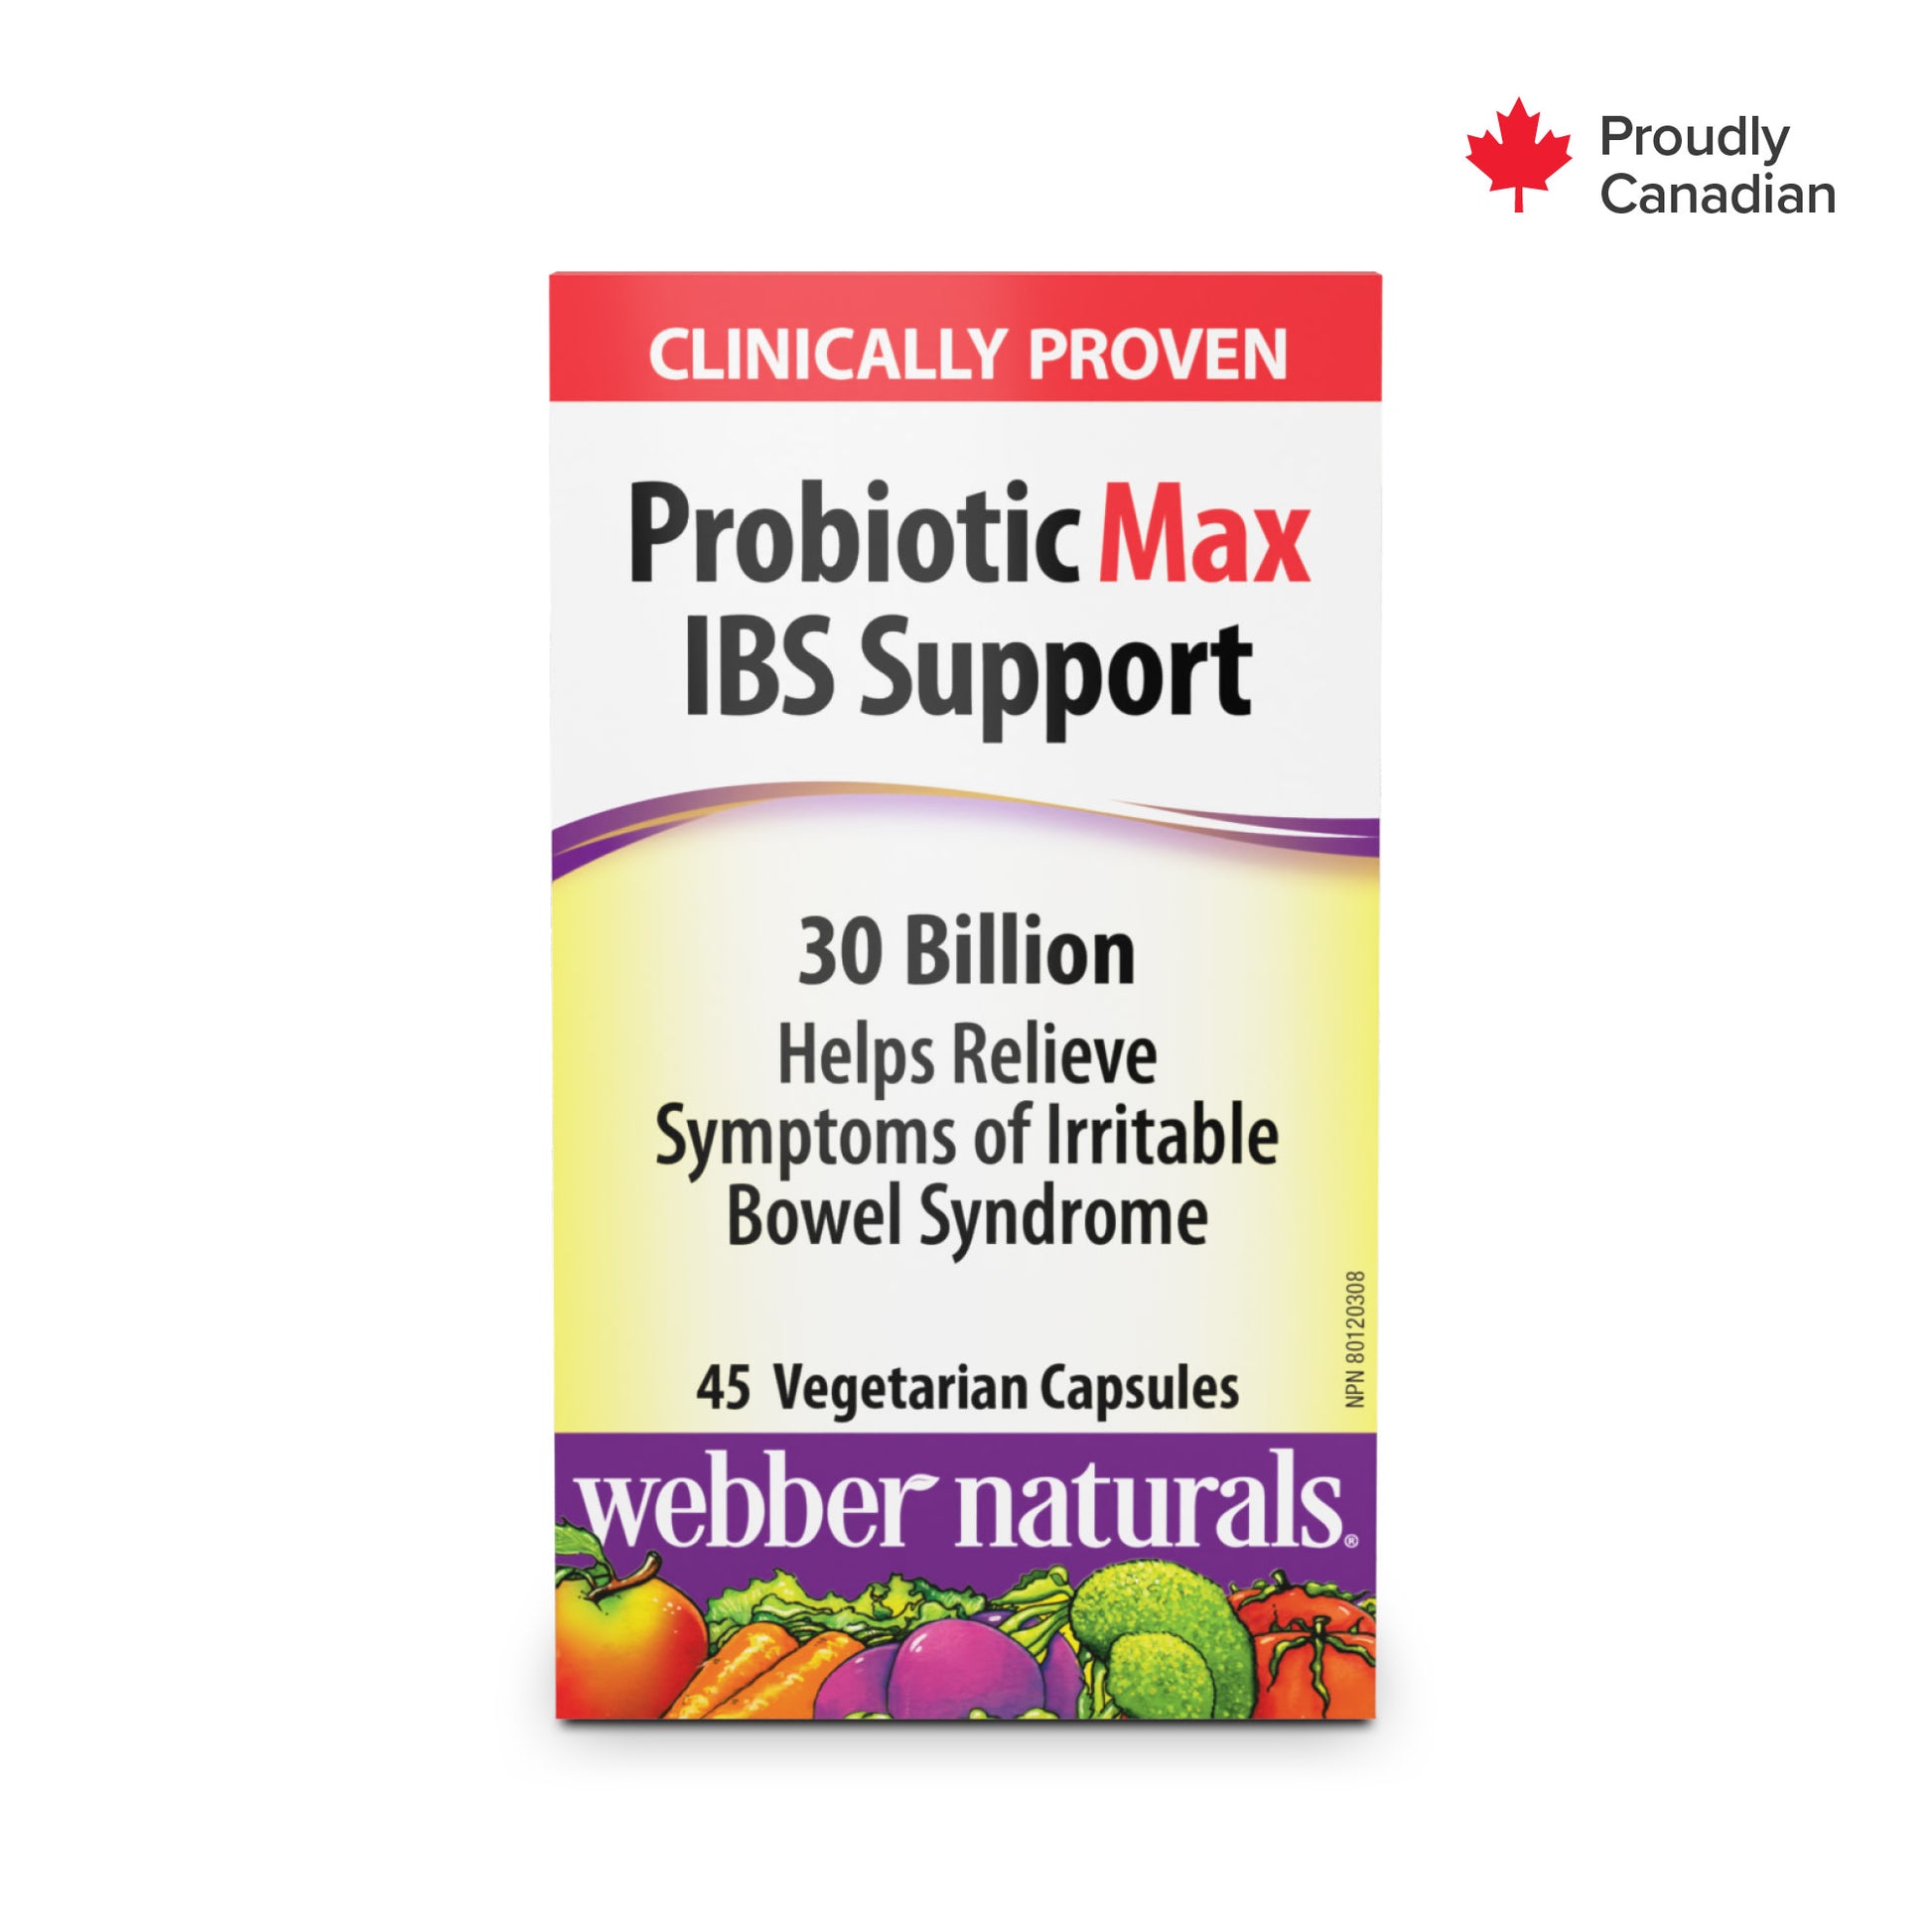 Probiotique Max anti-SII 30 milliards for Webber Naturals|v|hi-res|WN3916